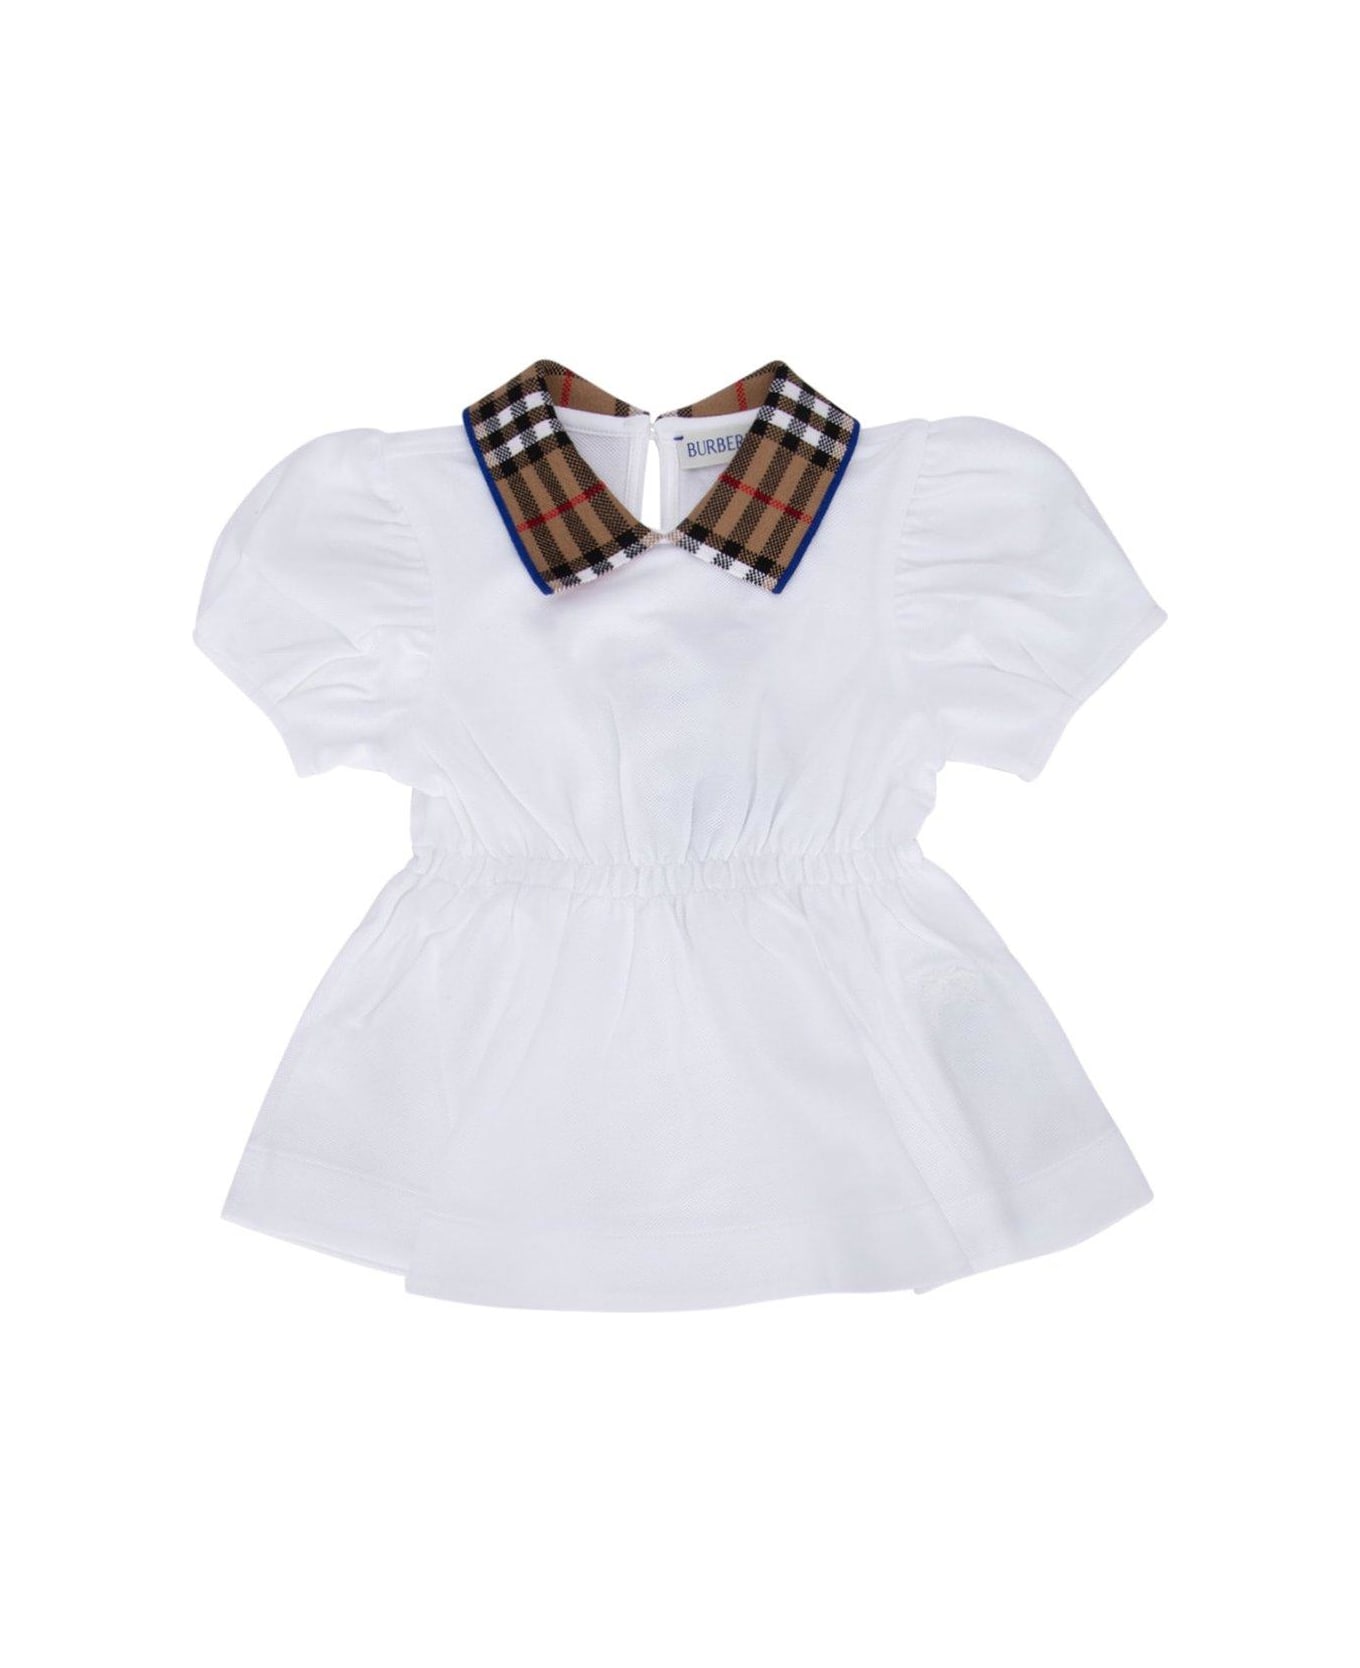 Burberry Check Collar Bloomer Dress - White